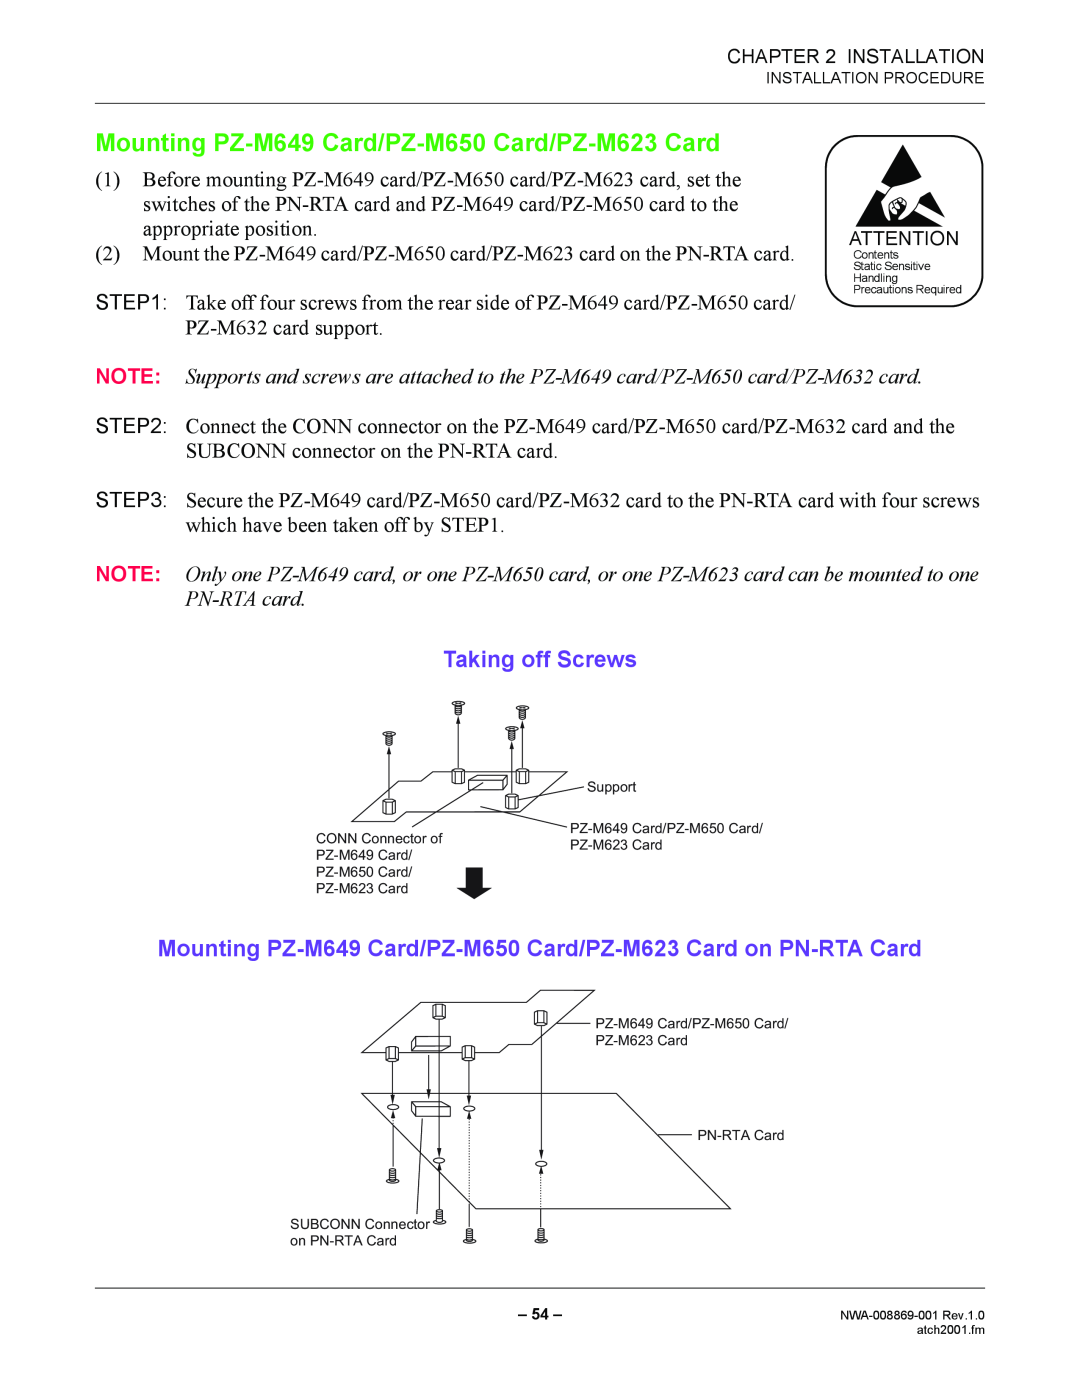 NEC NWA-008869-001 manual Mounting PZ-M649 Card/PZ-M650 Card/PZ-M623 Card, Taking off Screws 